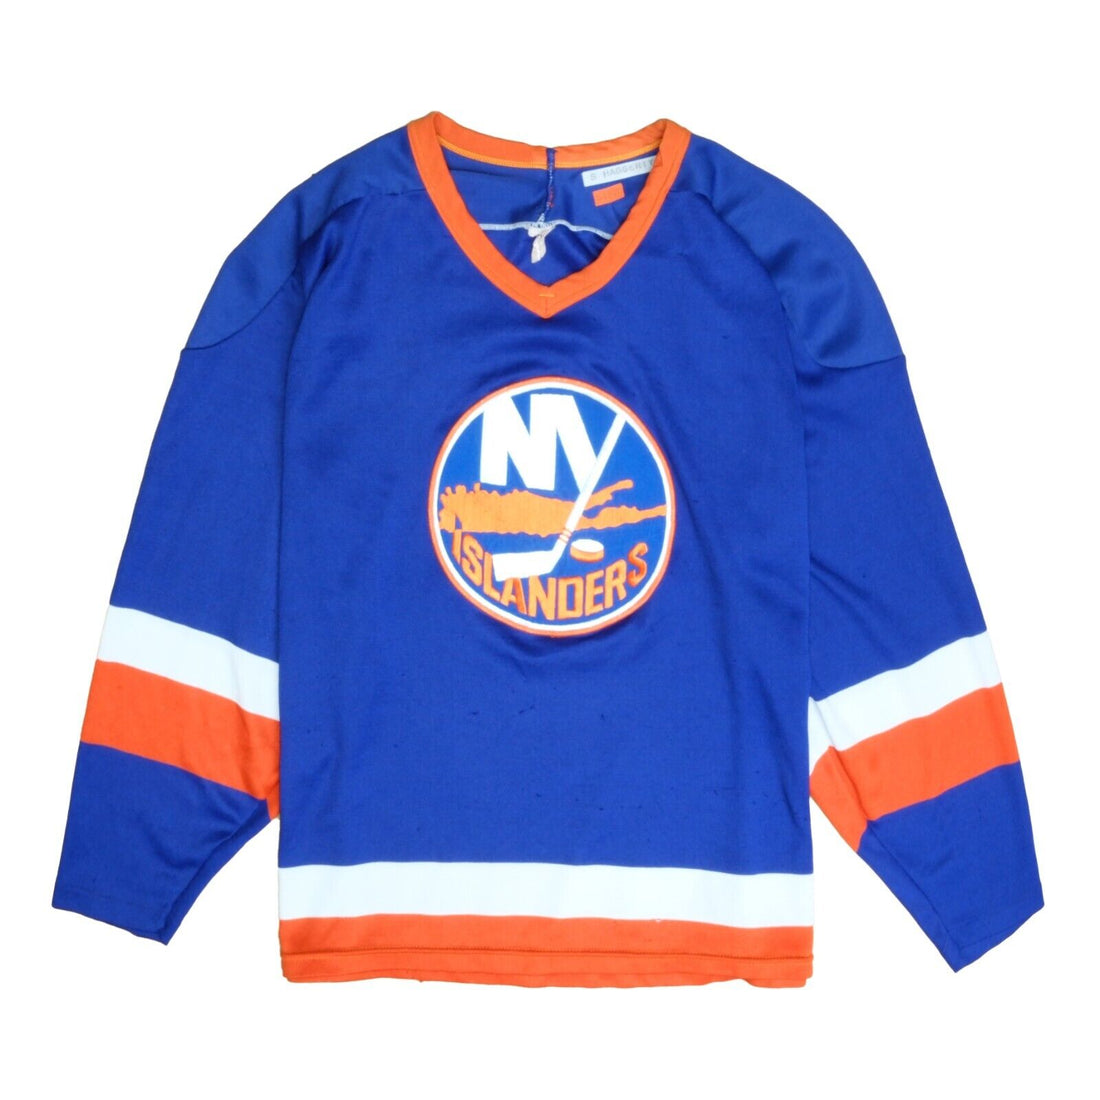 Vintage New York Islanders CCM Maska Jersey Size Large Blue NHL